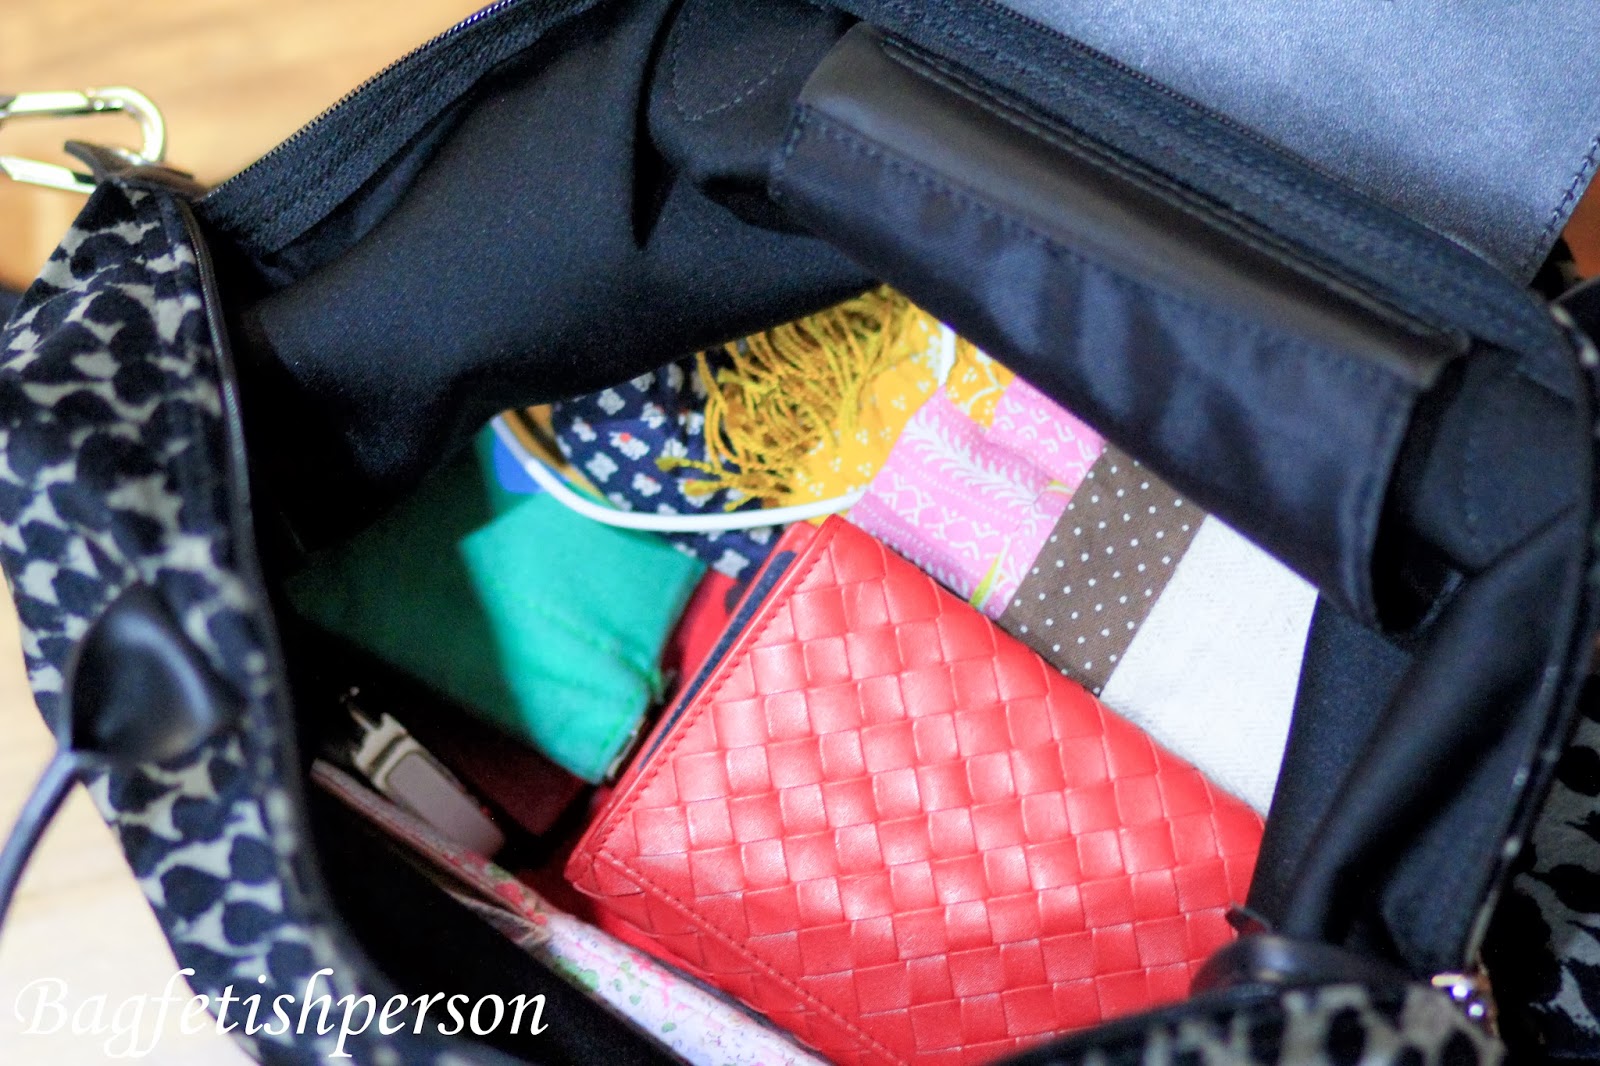 bagfetishperson: Inside my bag: Goyard St Louis PM